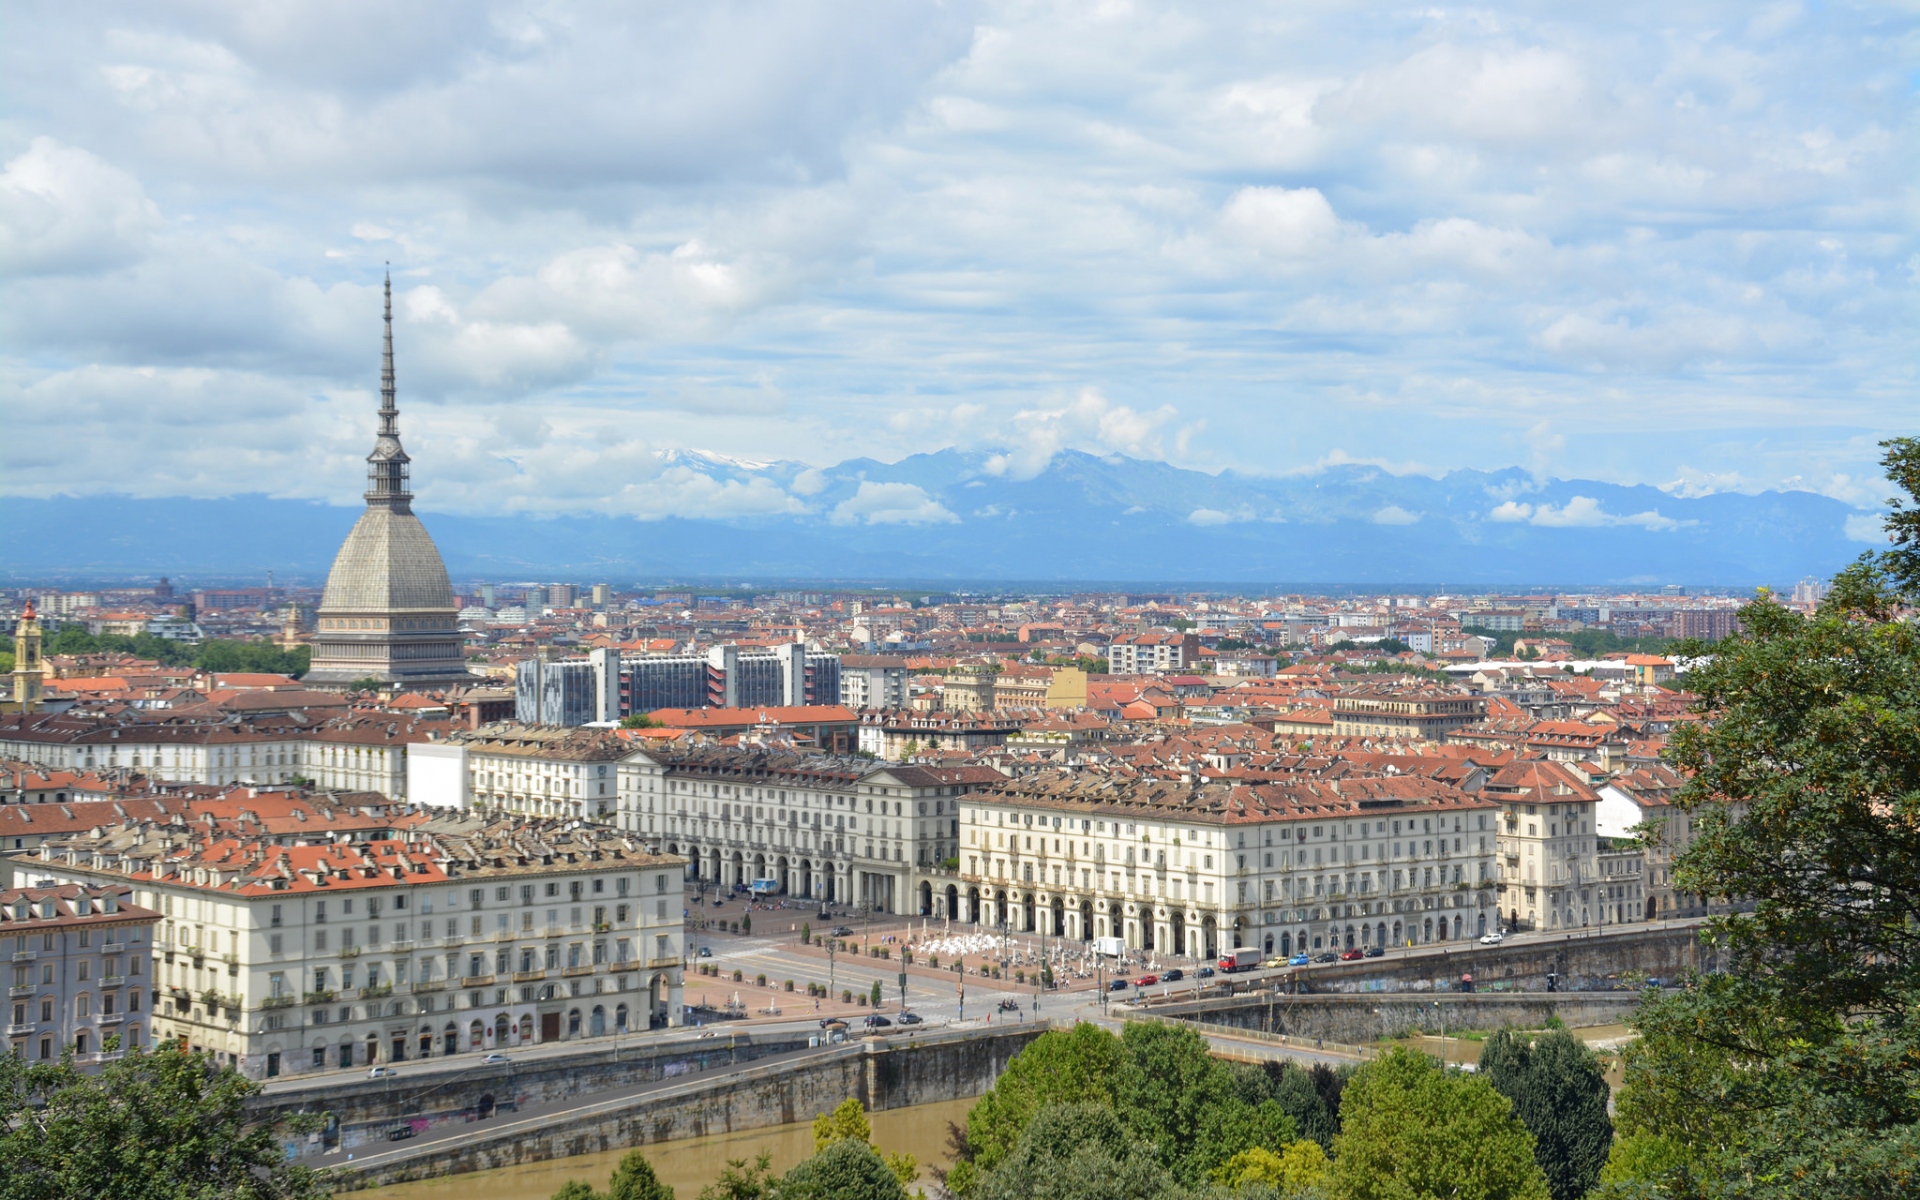 Картинки Турин, италия, здания, вид сверху фото и обои на рабочий стол